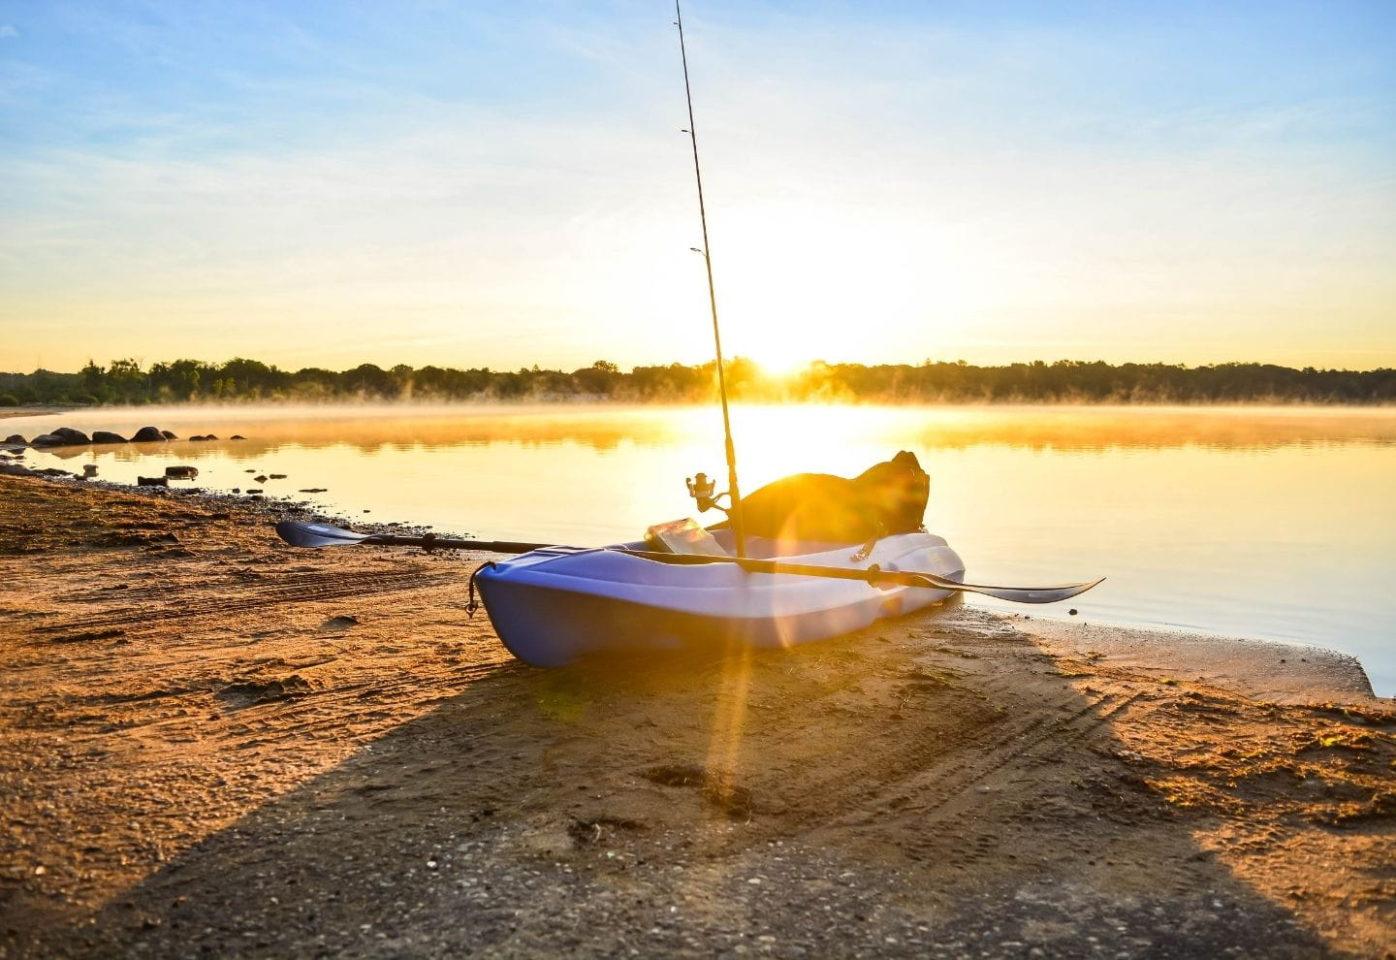 Fishing kayak on a shore during sunrise